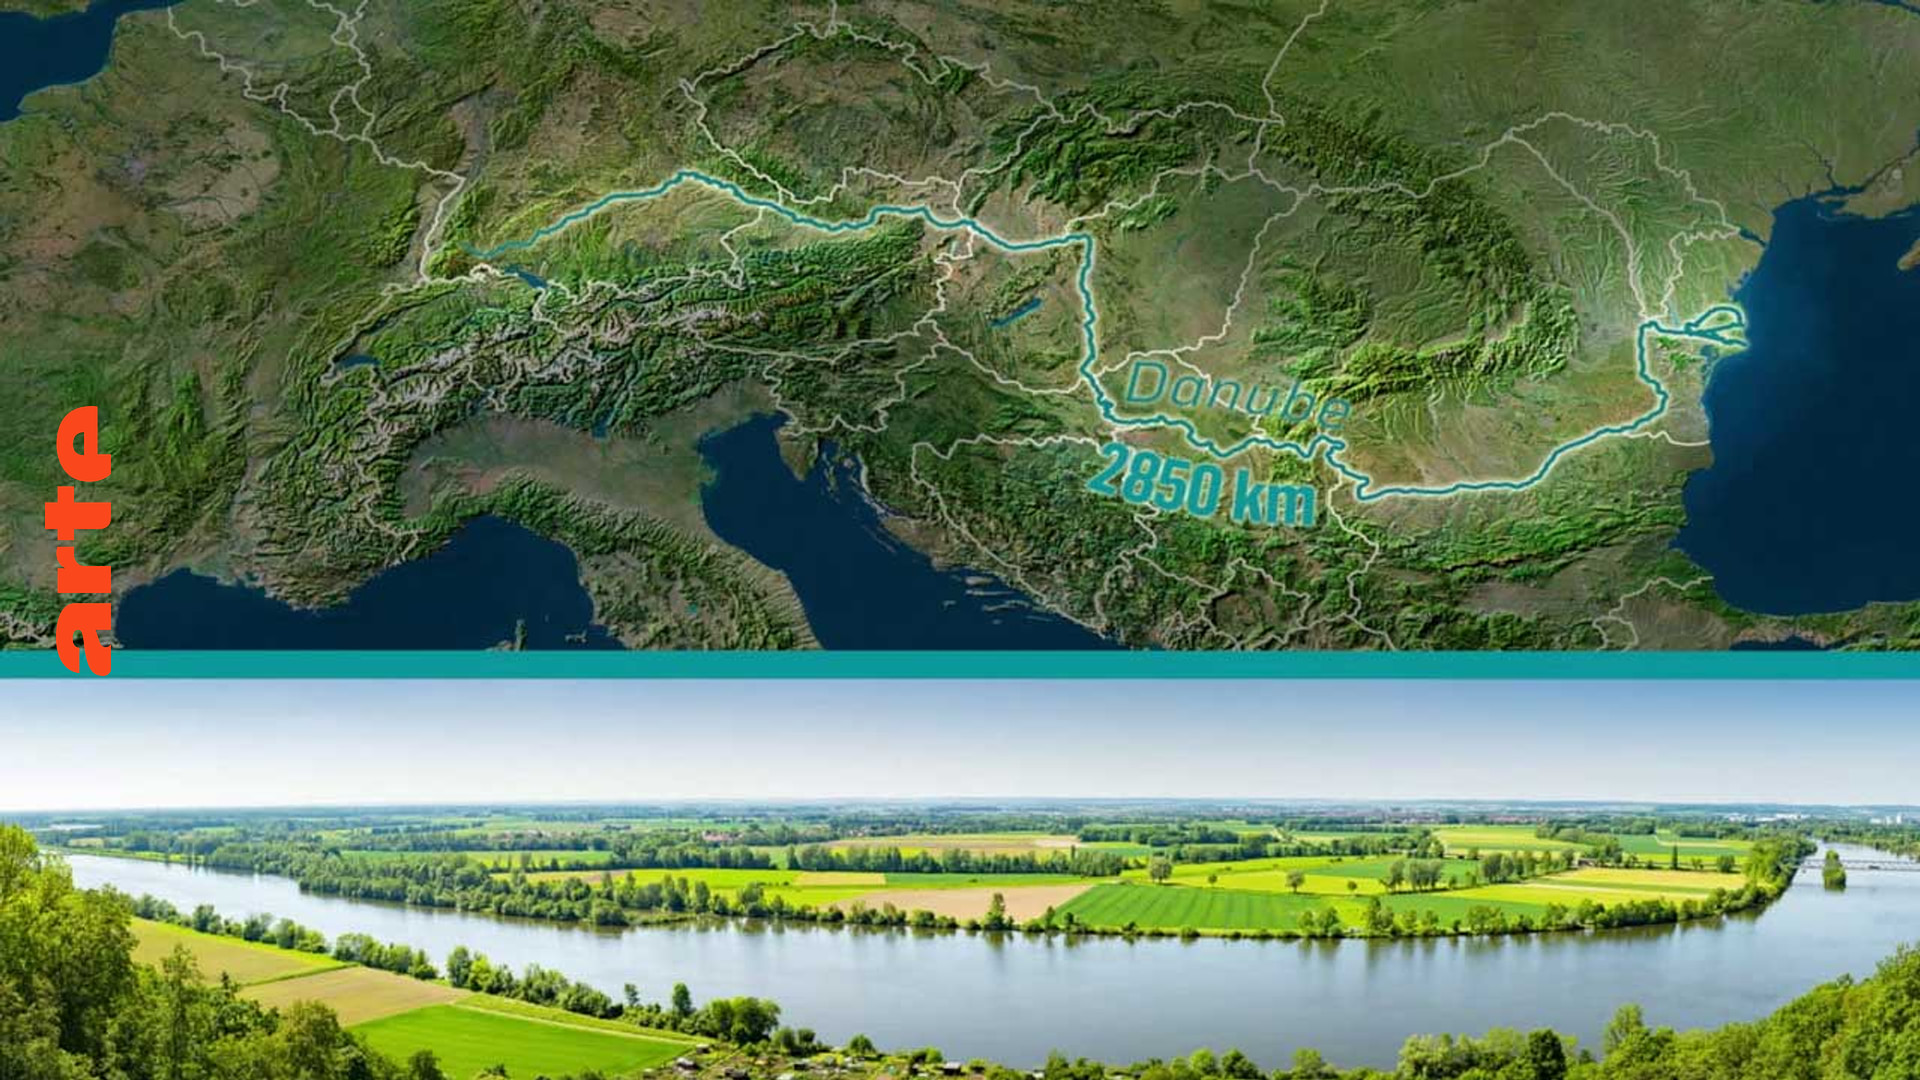 ap world history map rivers